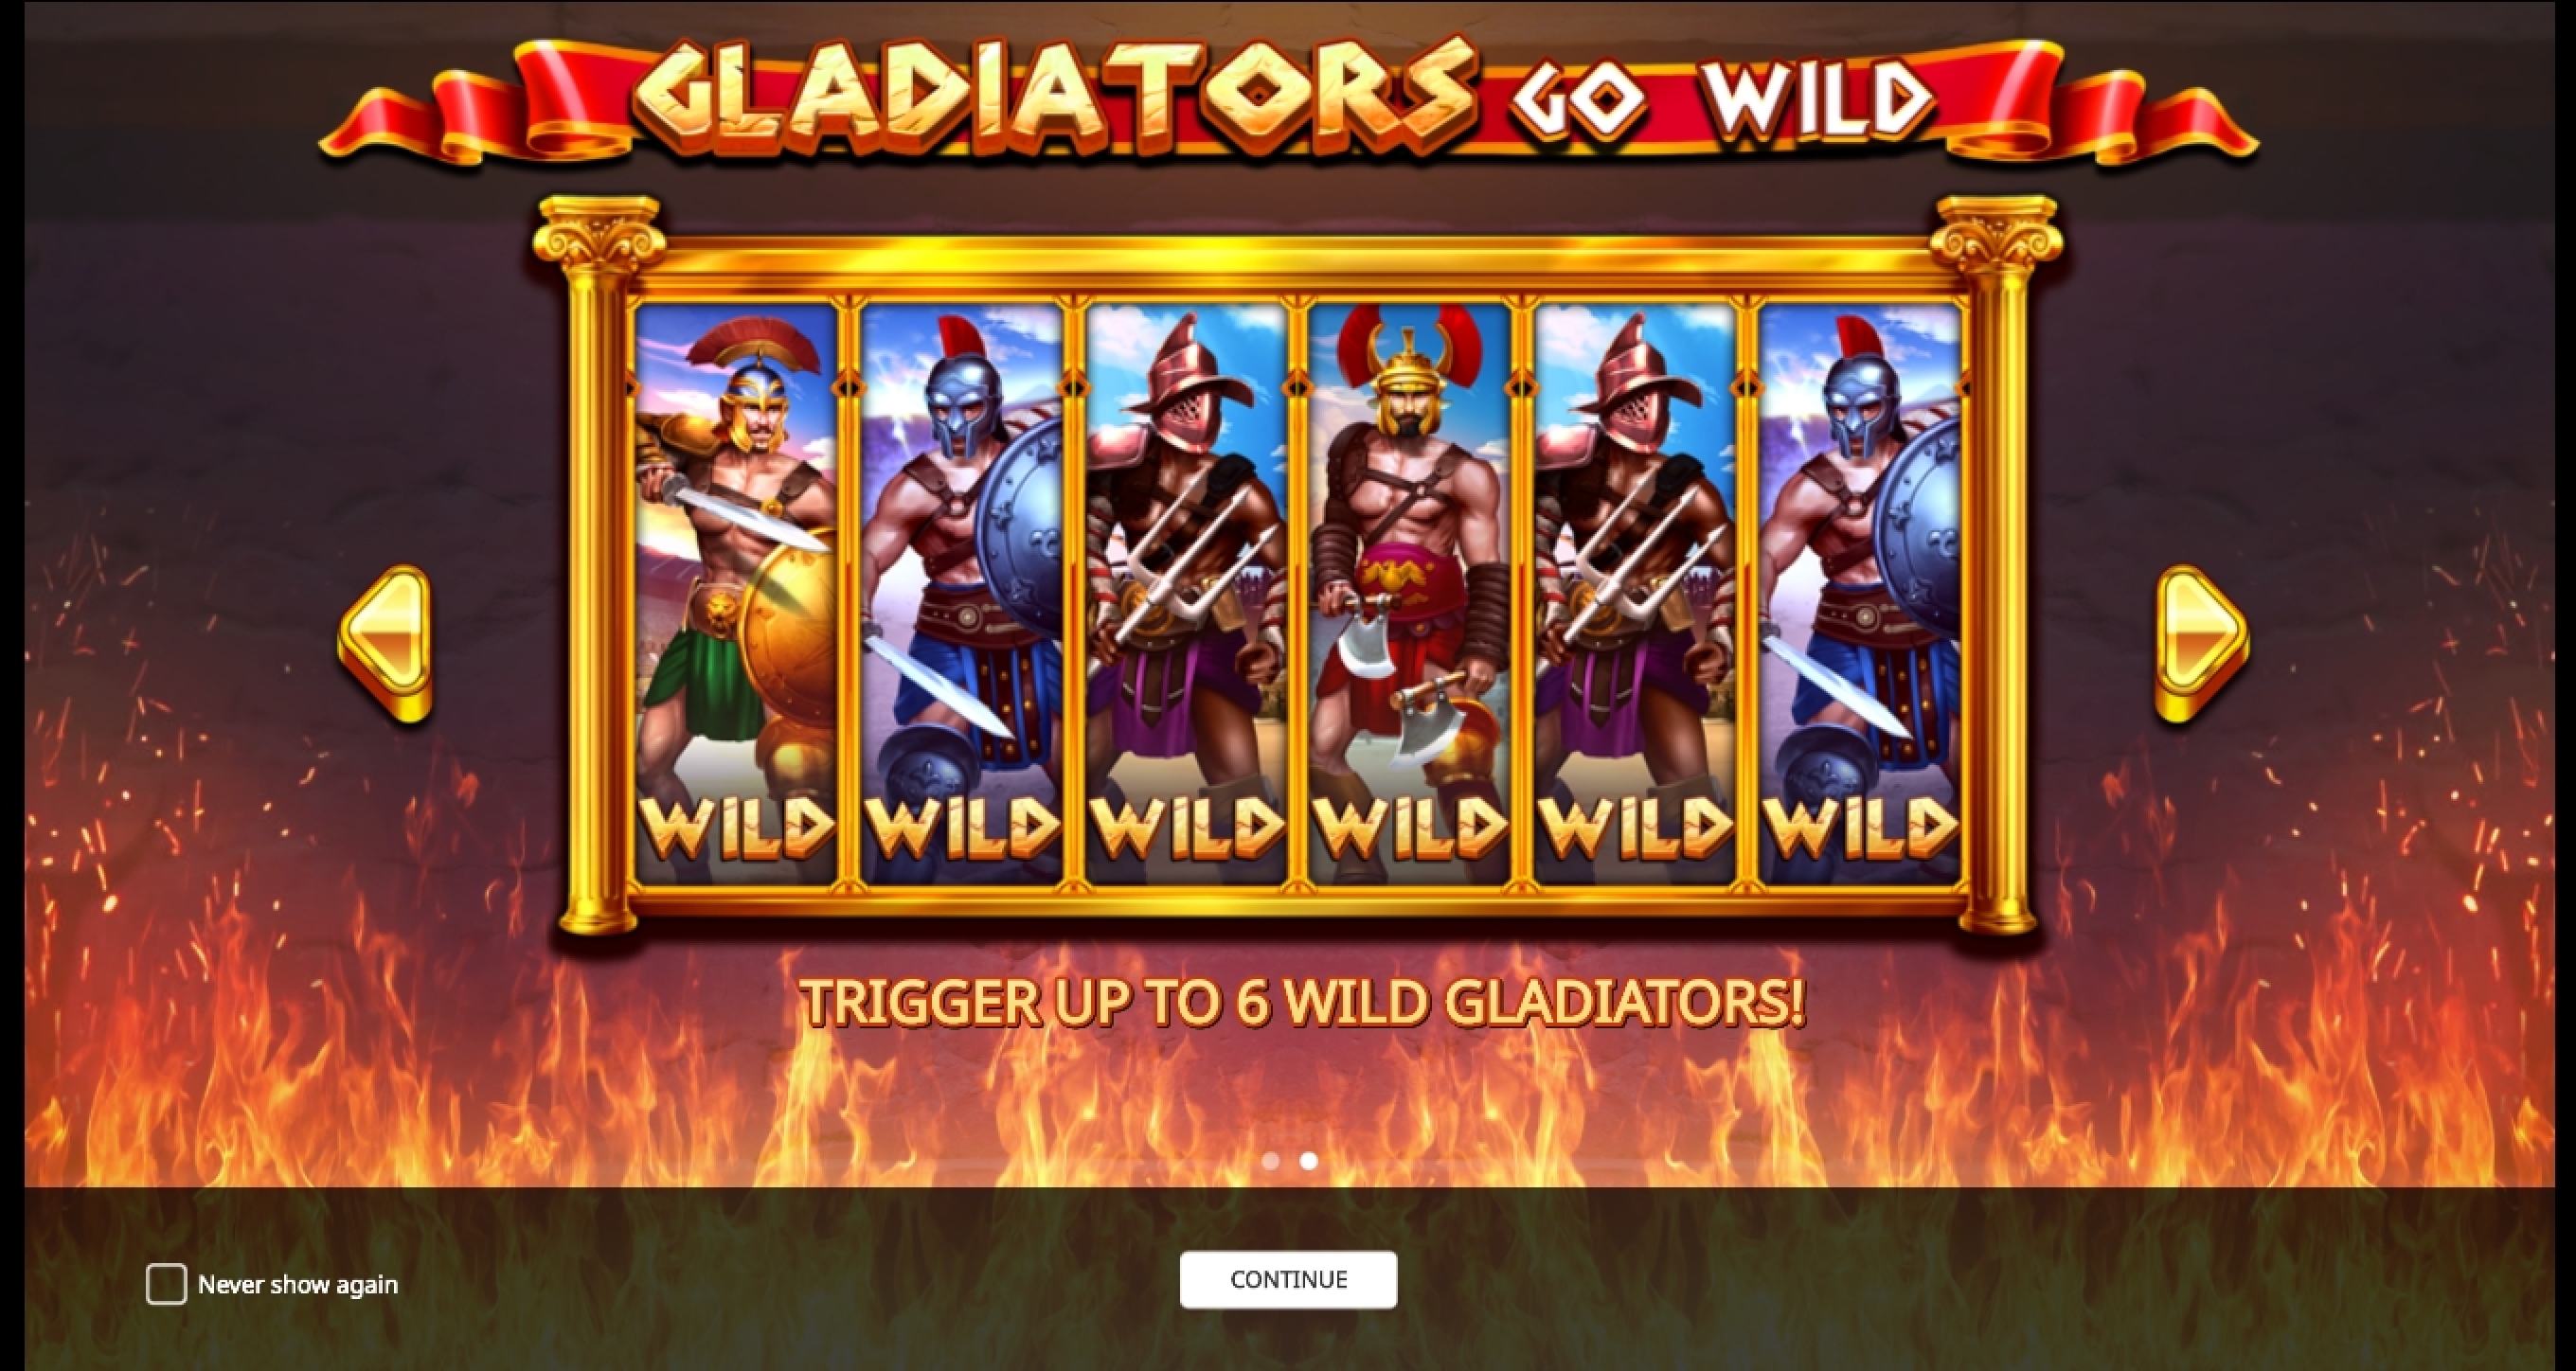 Play Gladiators Go Wild Free Casino Slot Game by iSoftBet